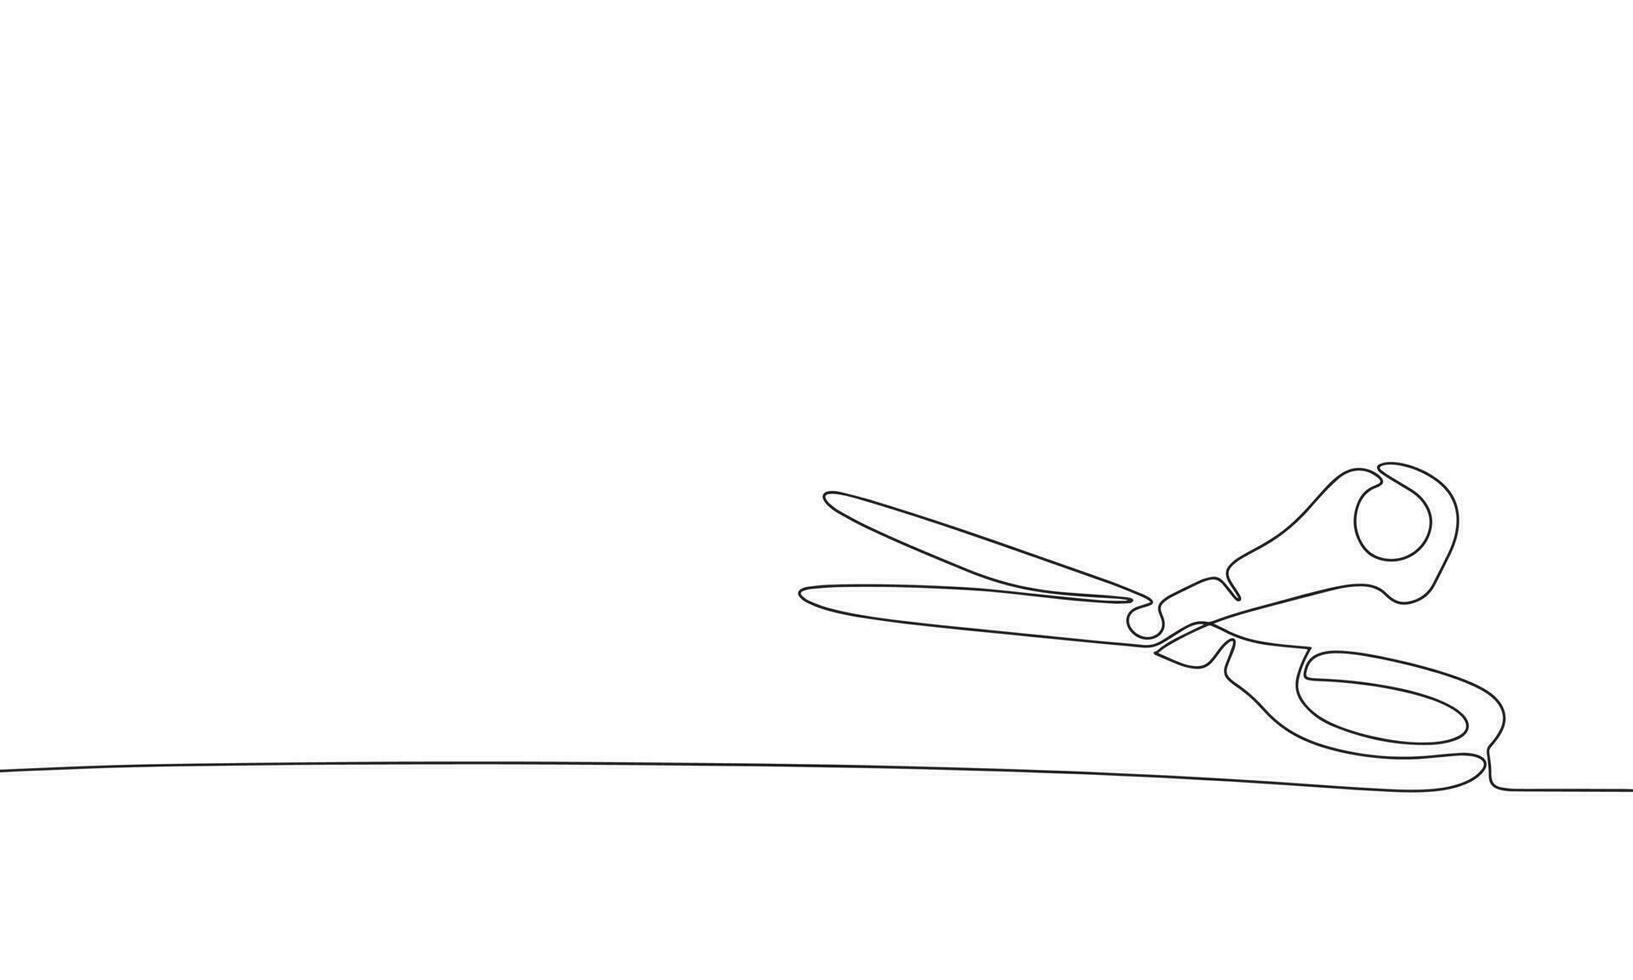 Scissors. Line art scissors. One line continuous vector illustration.